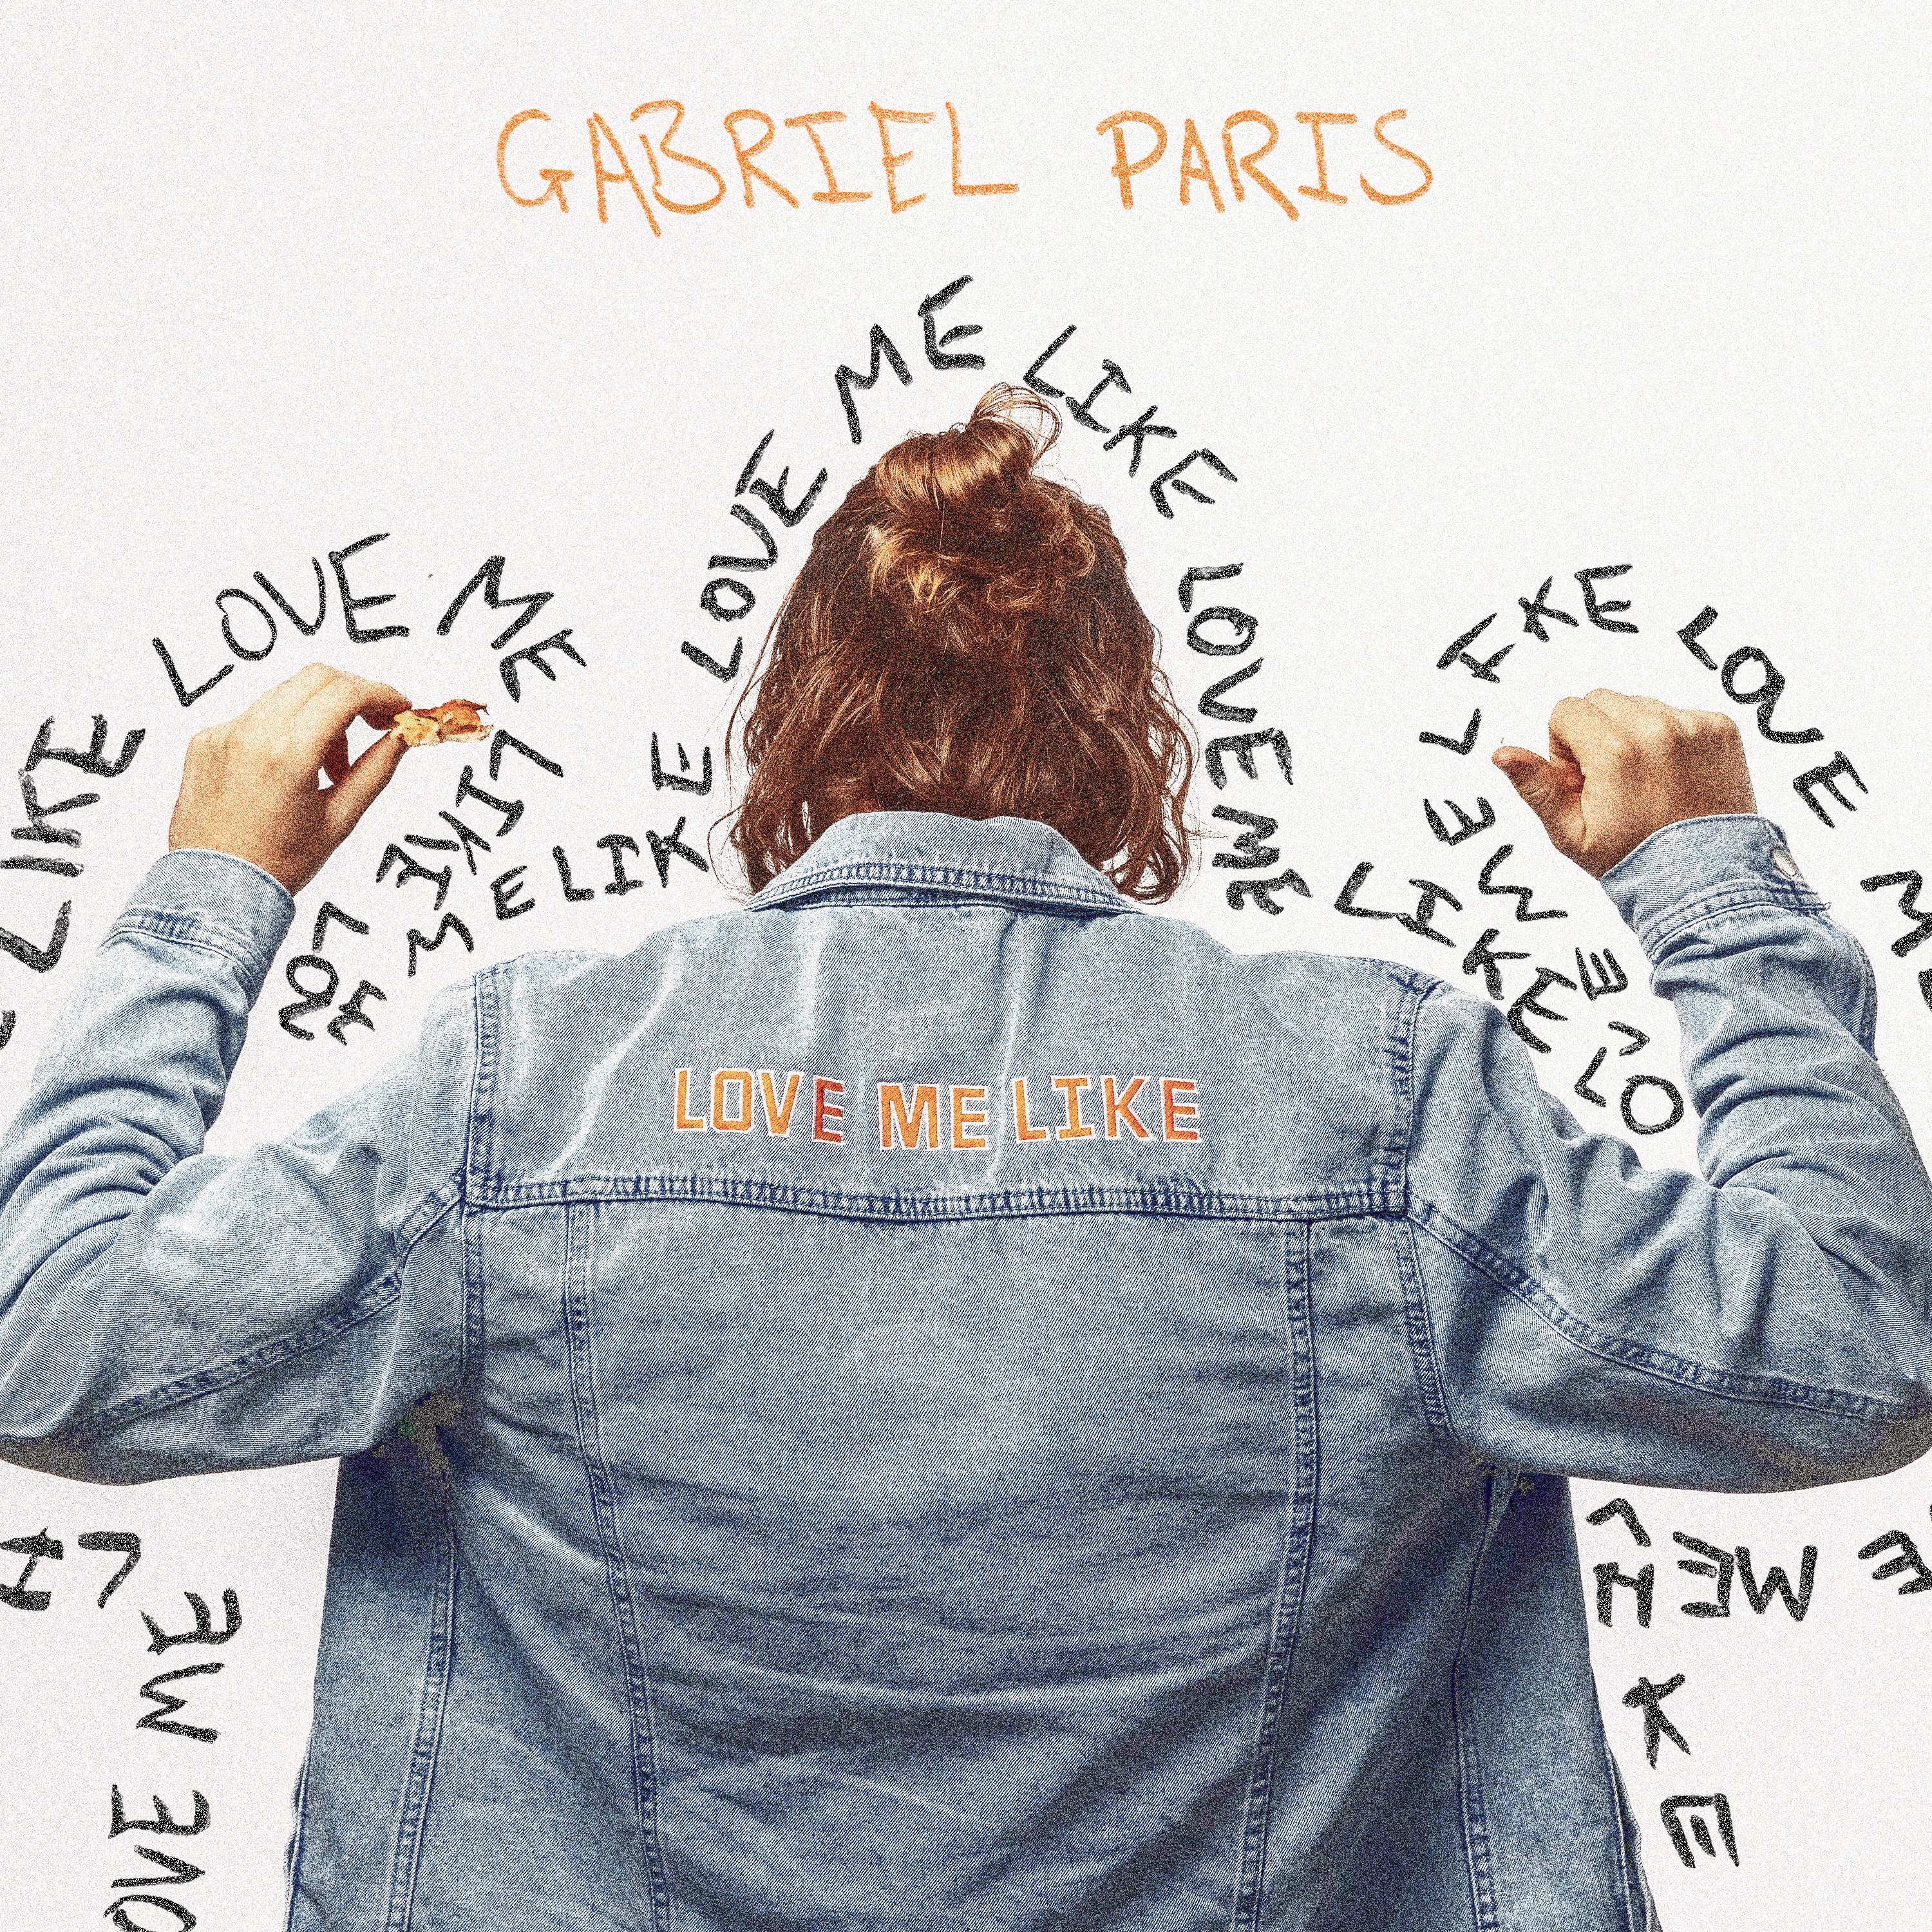 Gabrielle paris - GABRIELLE PARIS